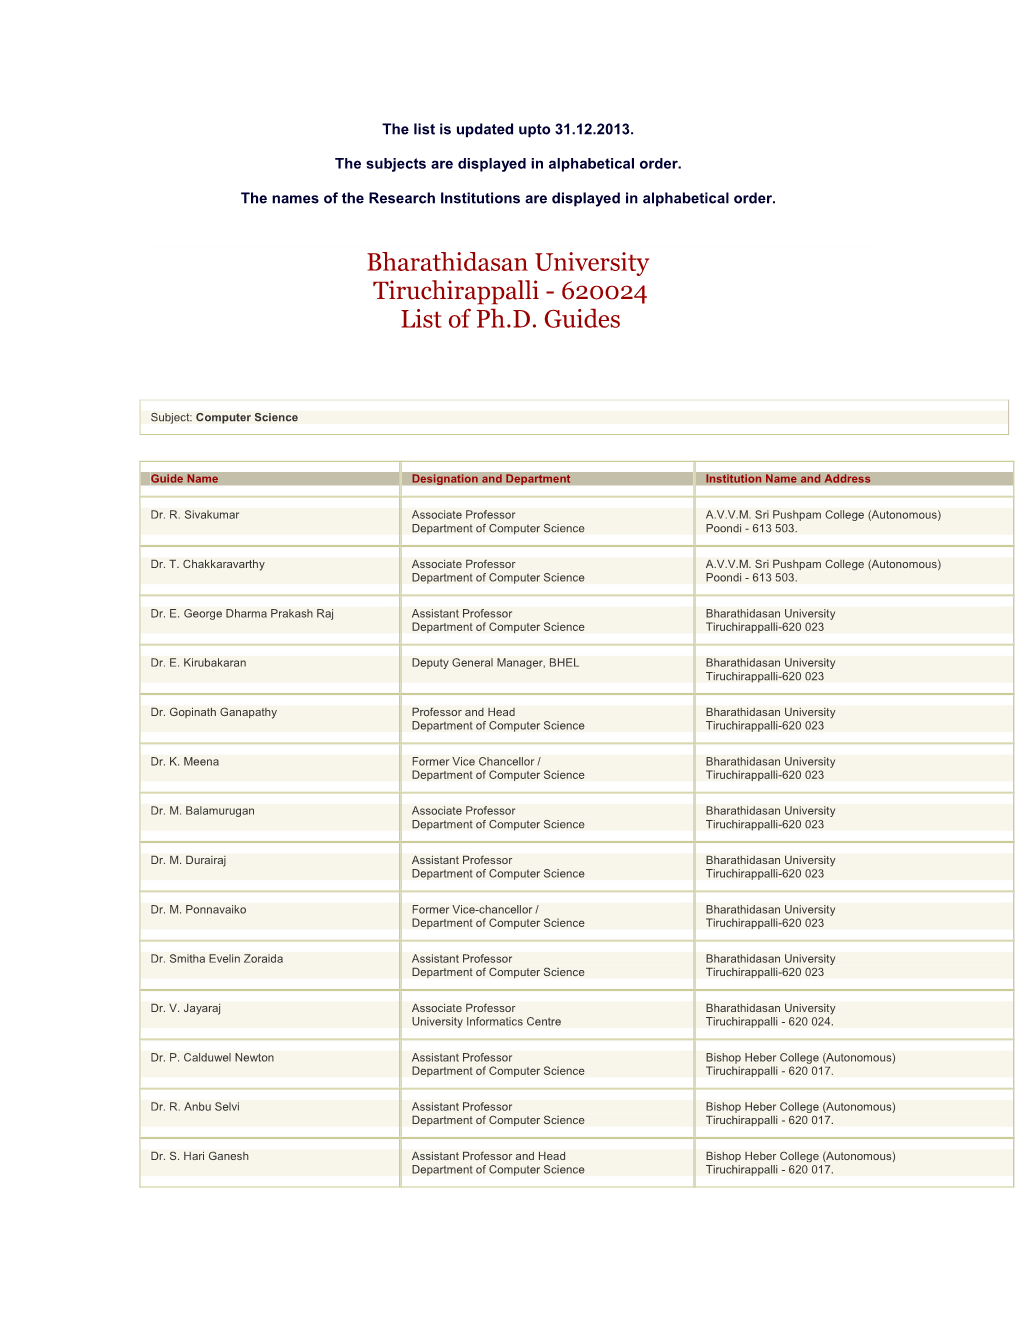 Bharathidasan University Tiruchirappalli - 620024 List of Ph.D